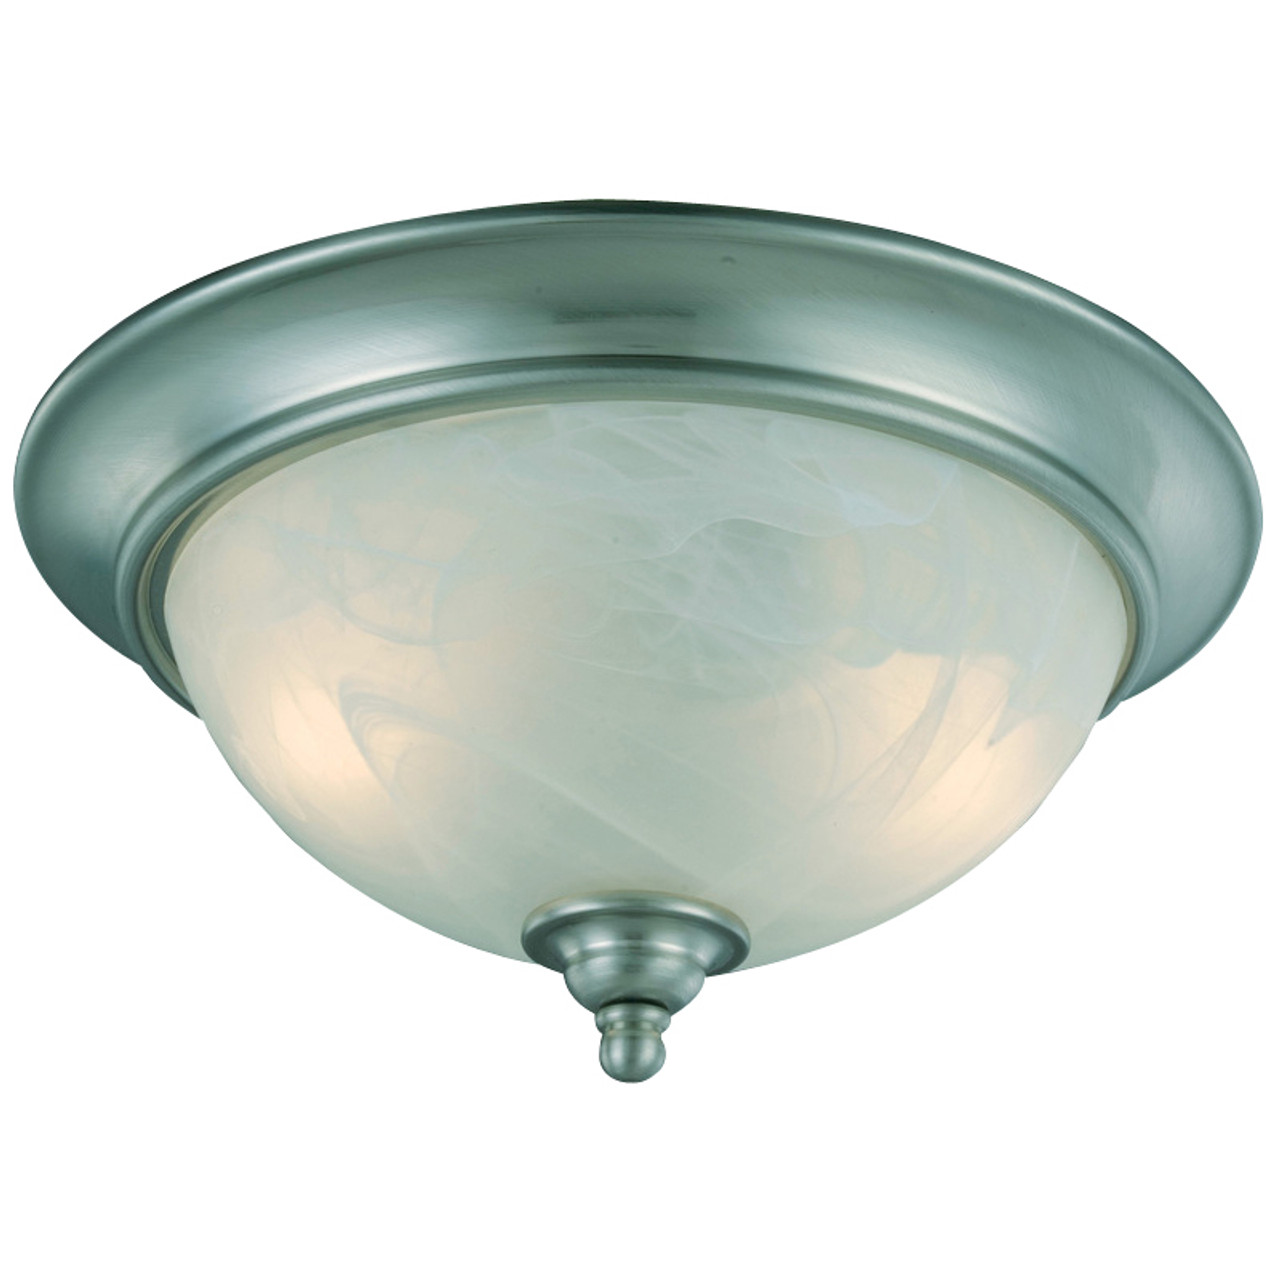 Satin Nickel Flush Mount Ceiling Light Fixture 10 4449 Discount